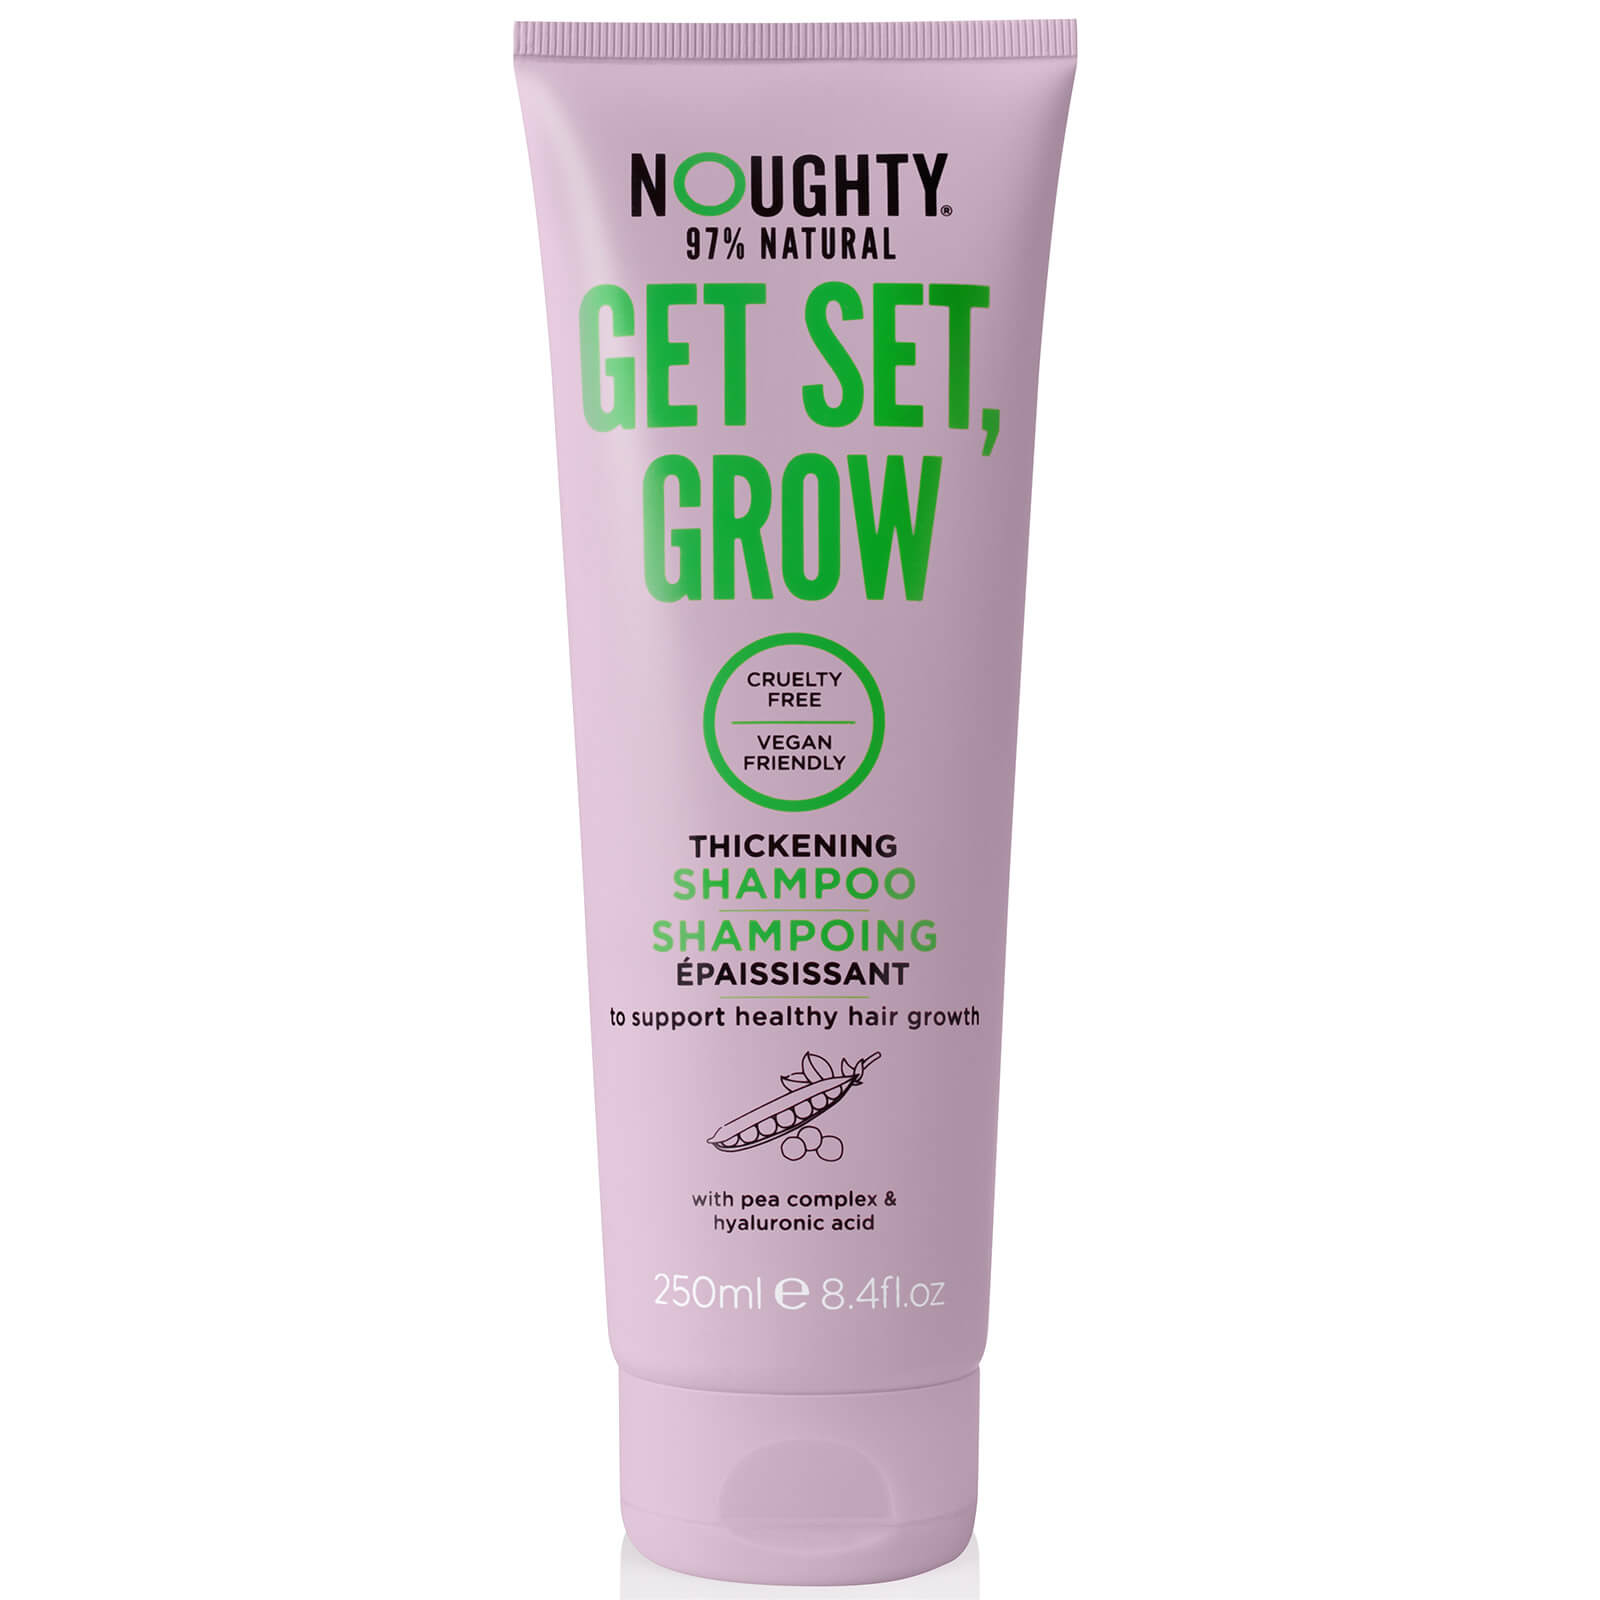 Noughty Get Set Grow Shampoo 250ml lookfantastic.com imagine